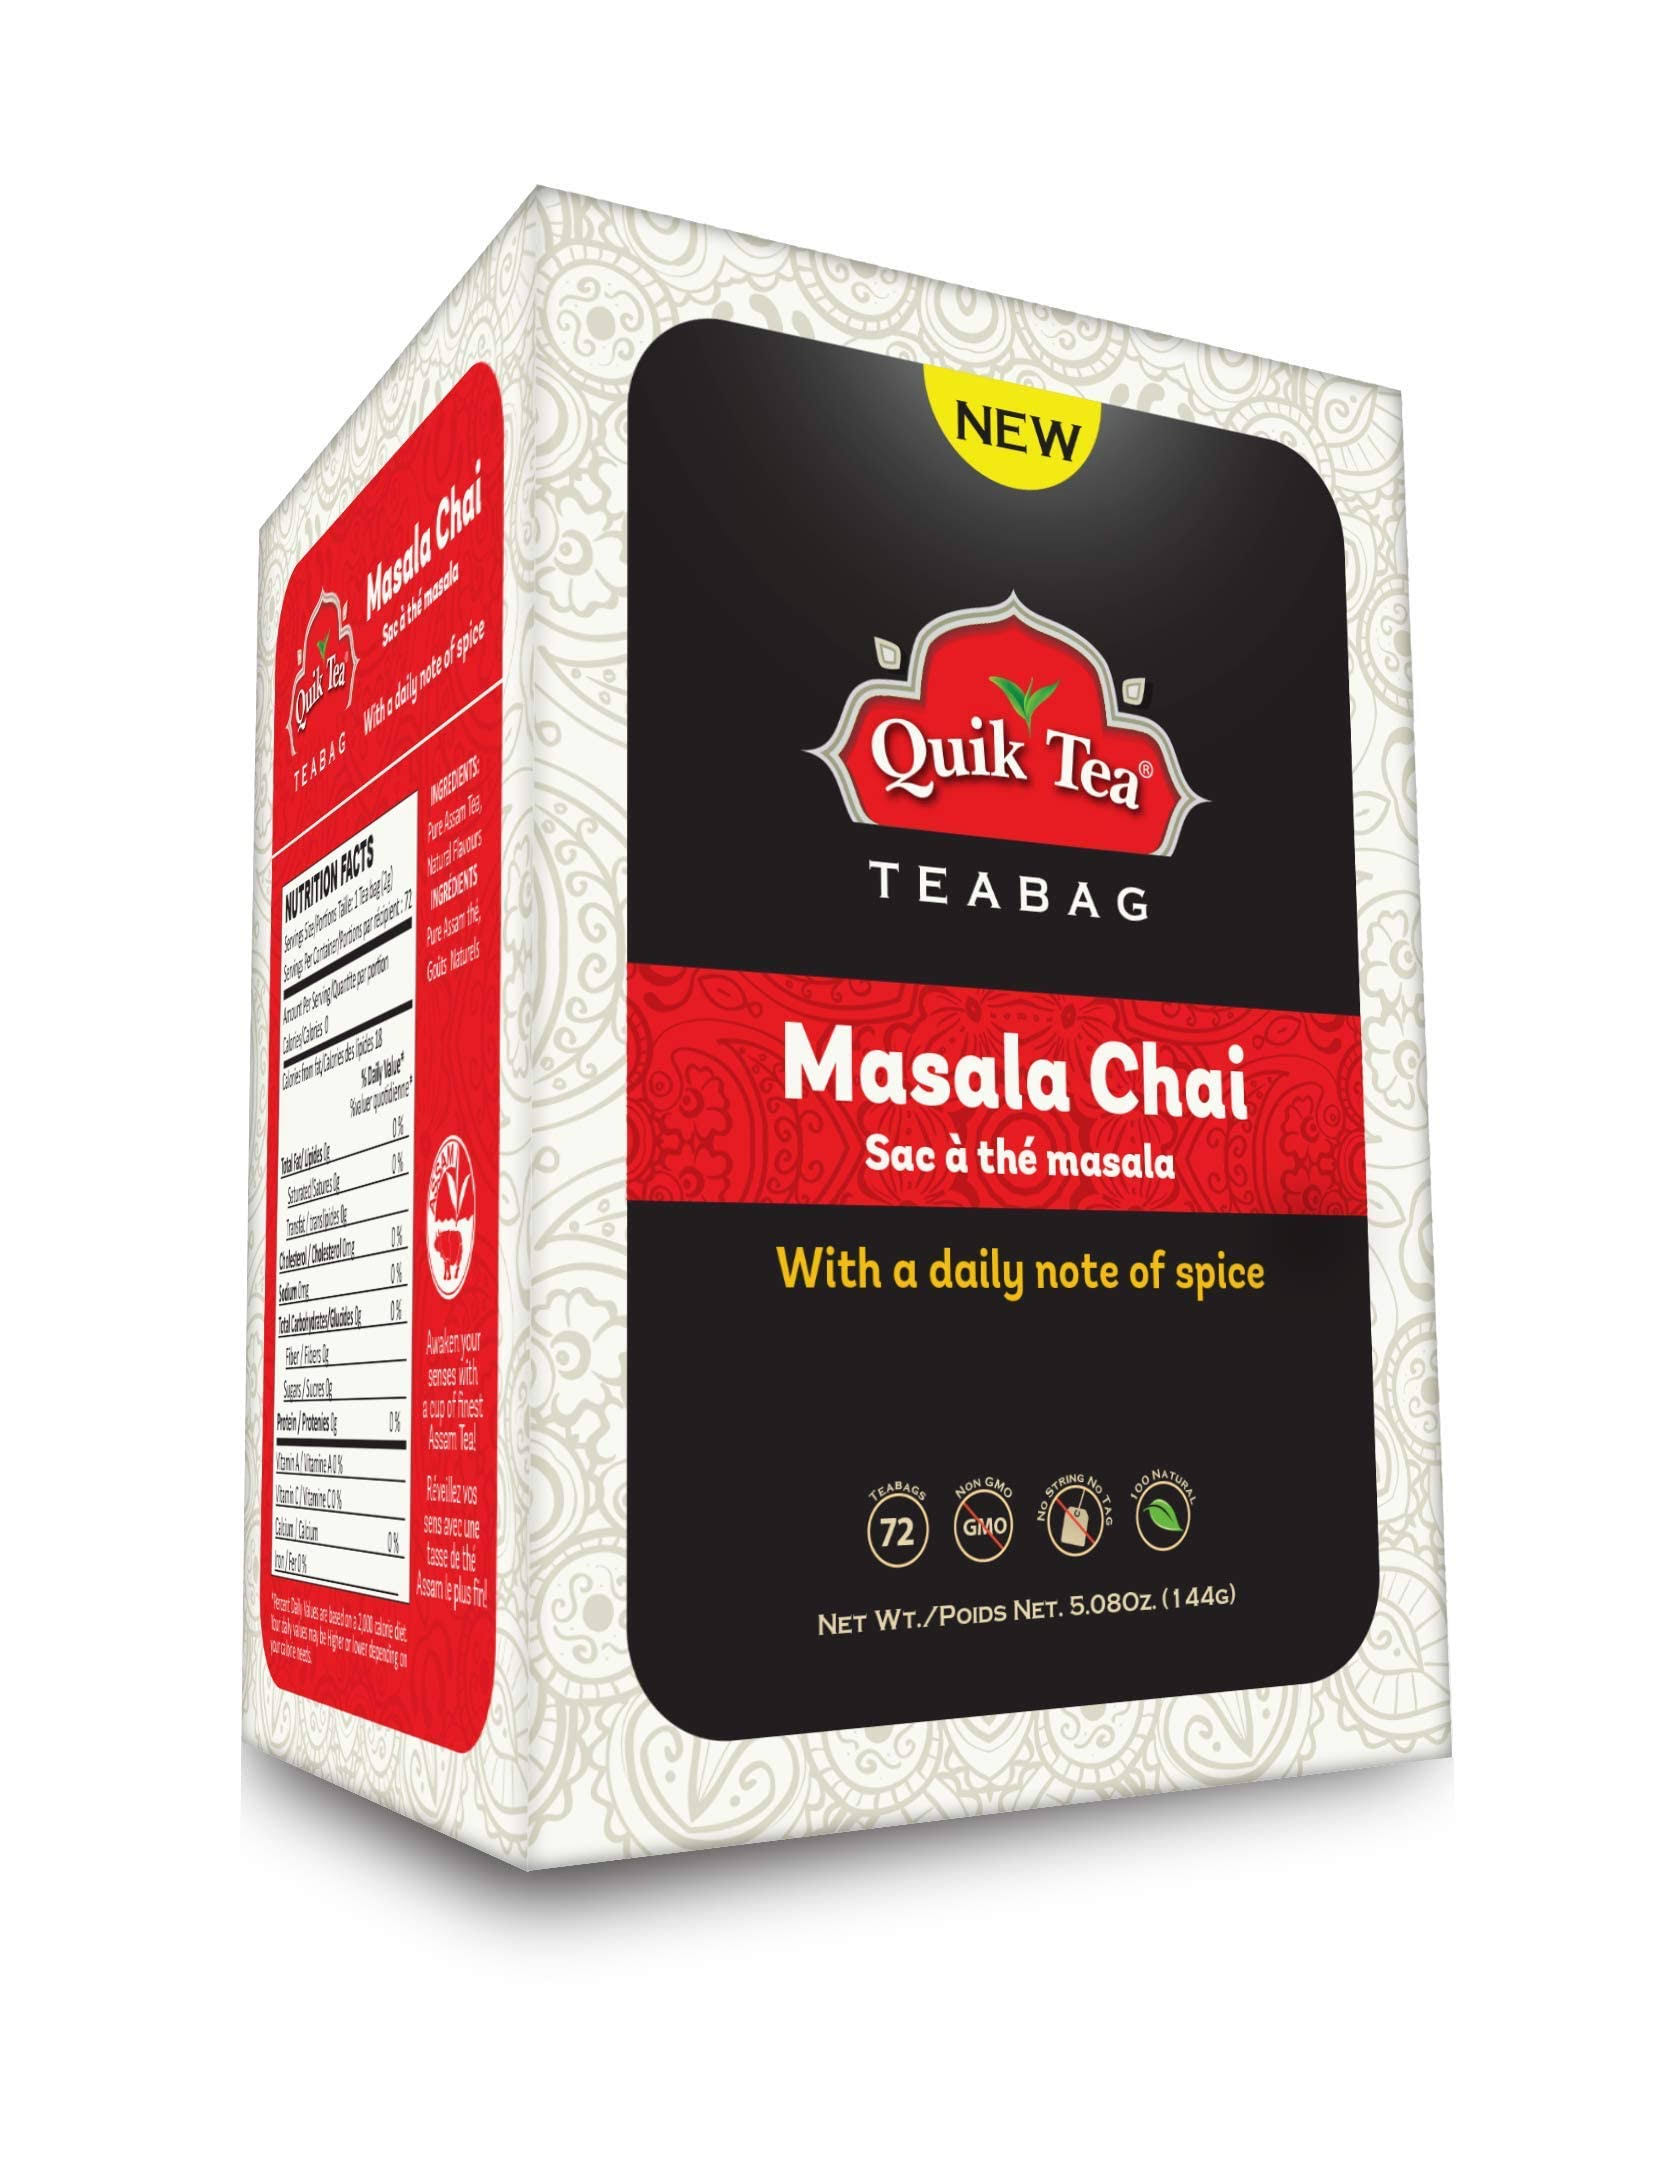 QuikTea Masala Chai Tea Bags - 72 Count Single Box - All Natural Preservative Free Tea Bags From Assam